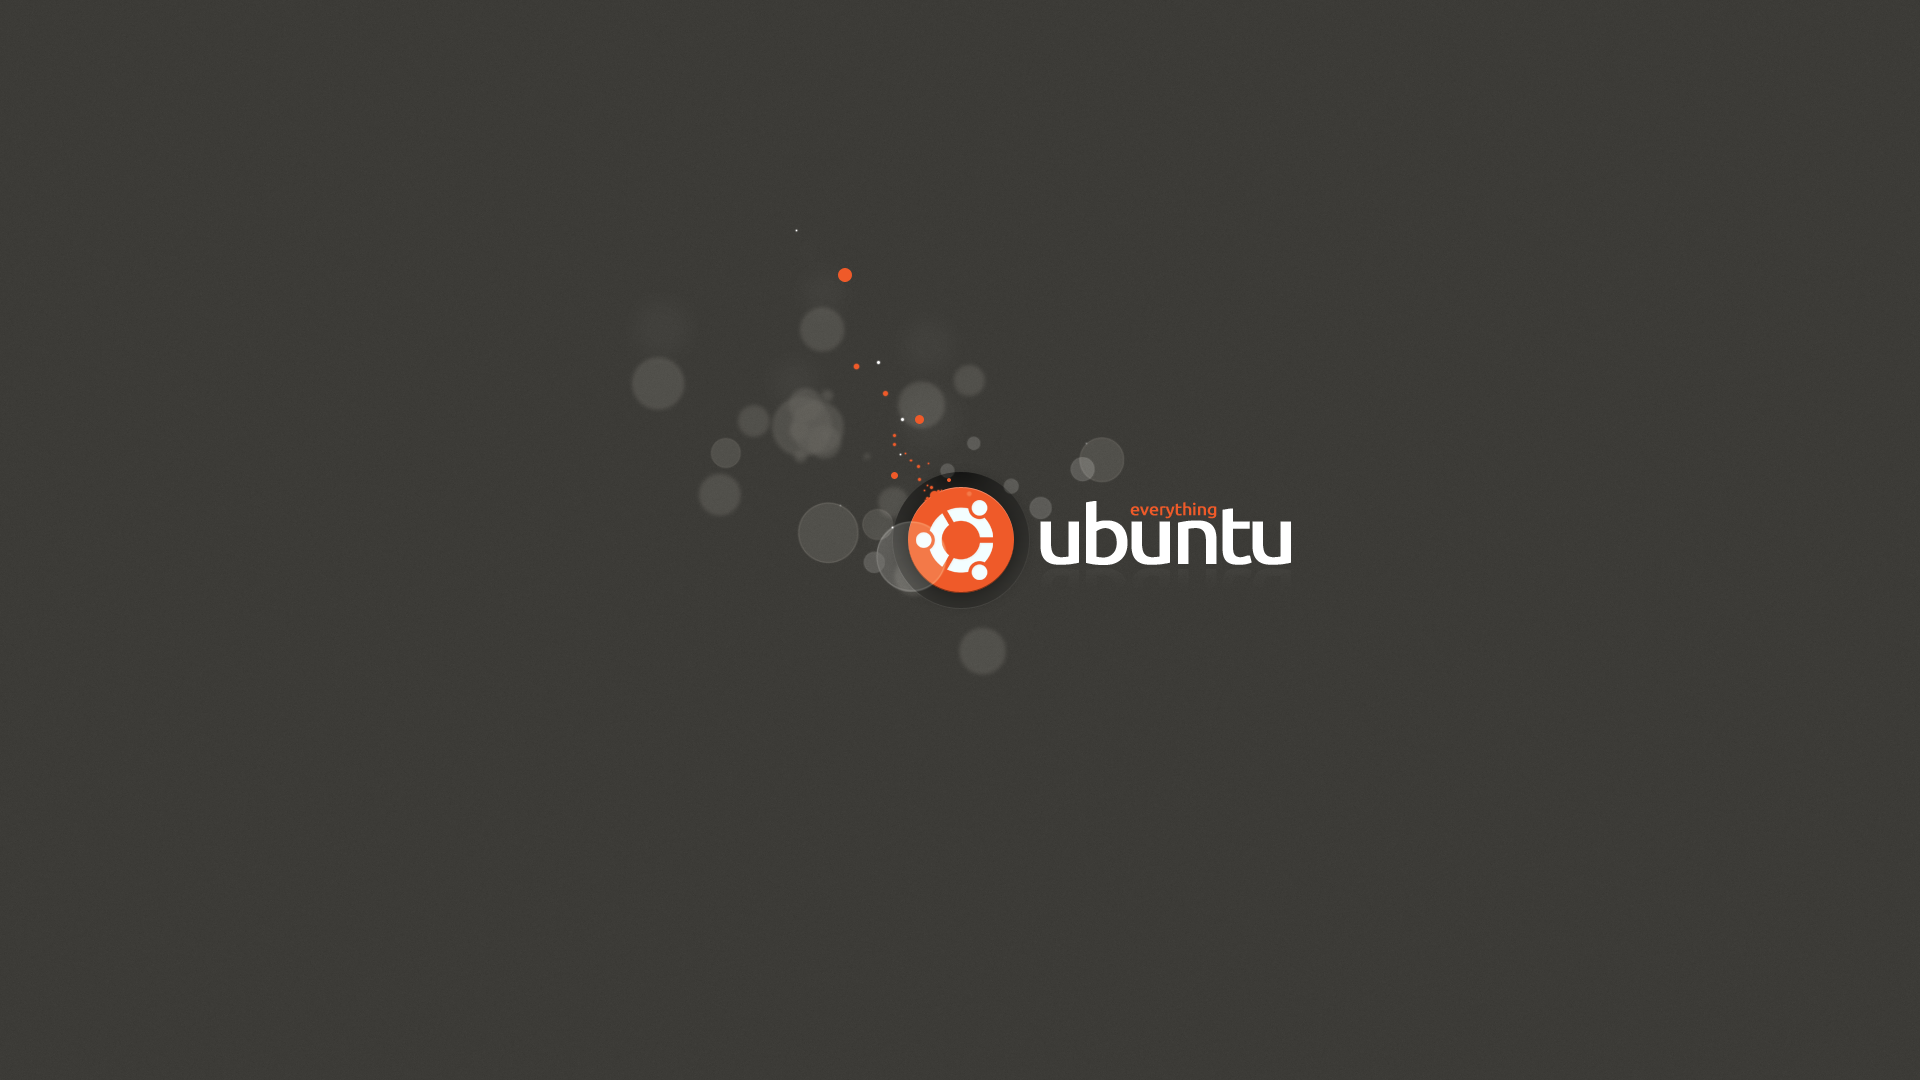 Ubuntu wallpaper by Mikebeecham   Tux planet